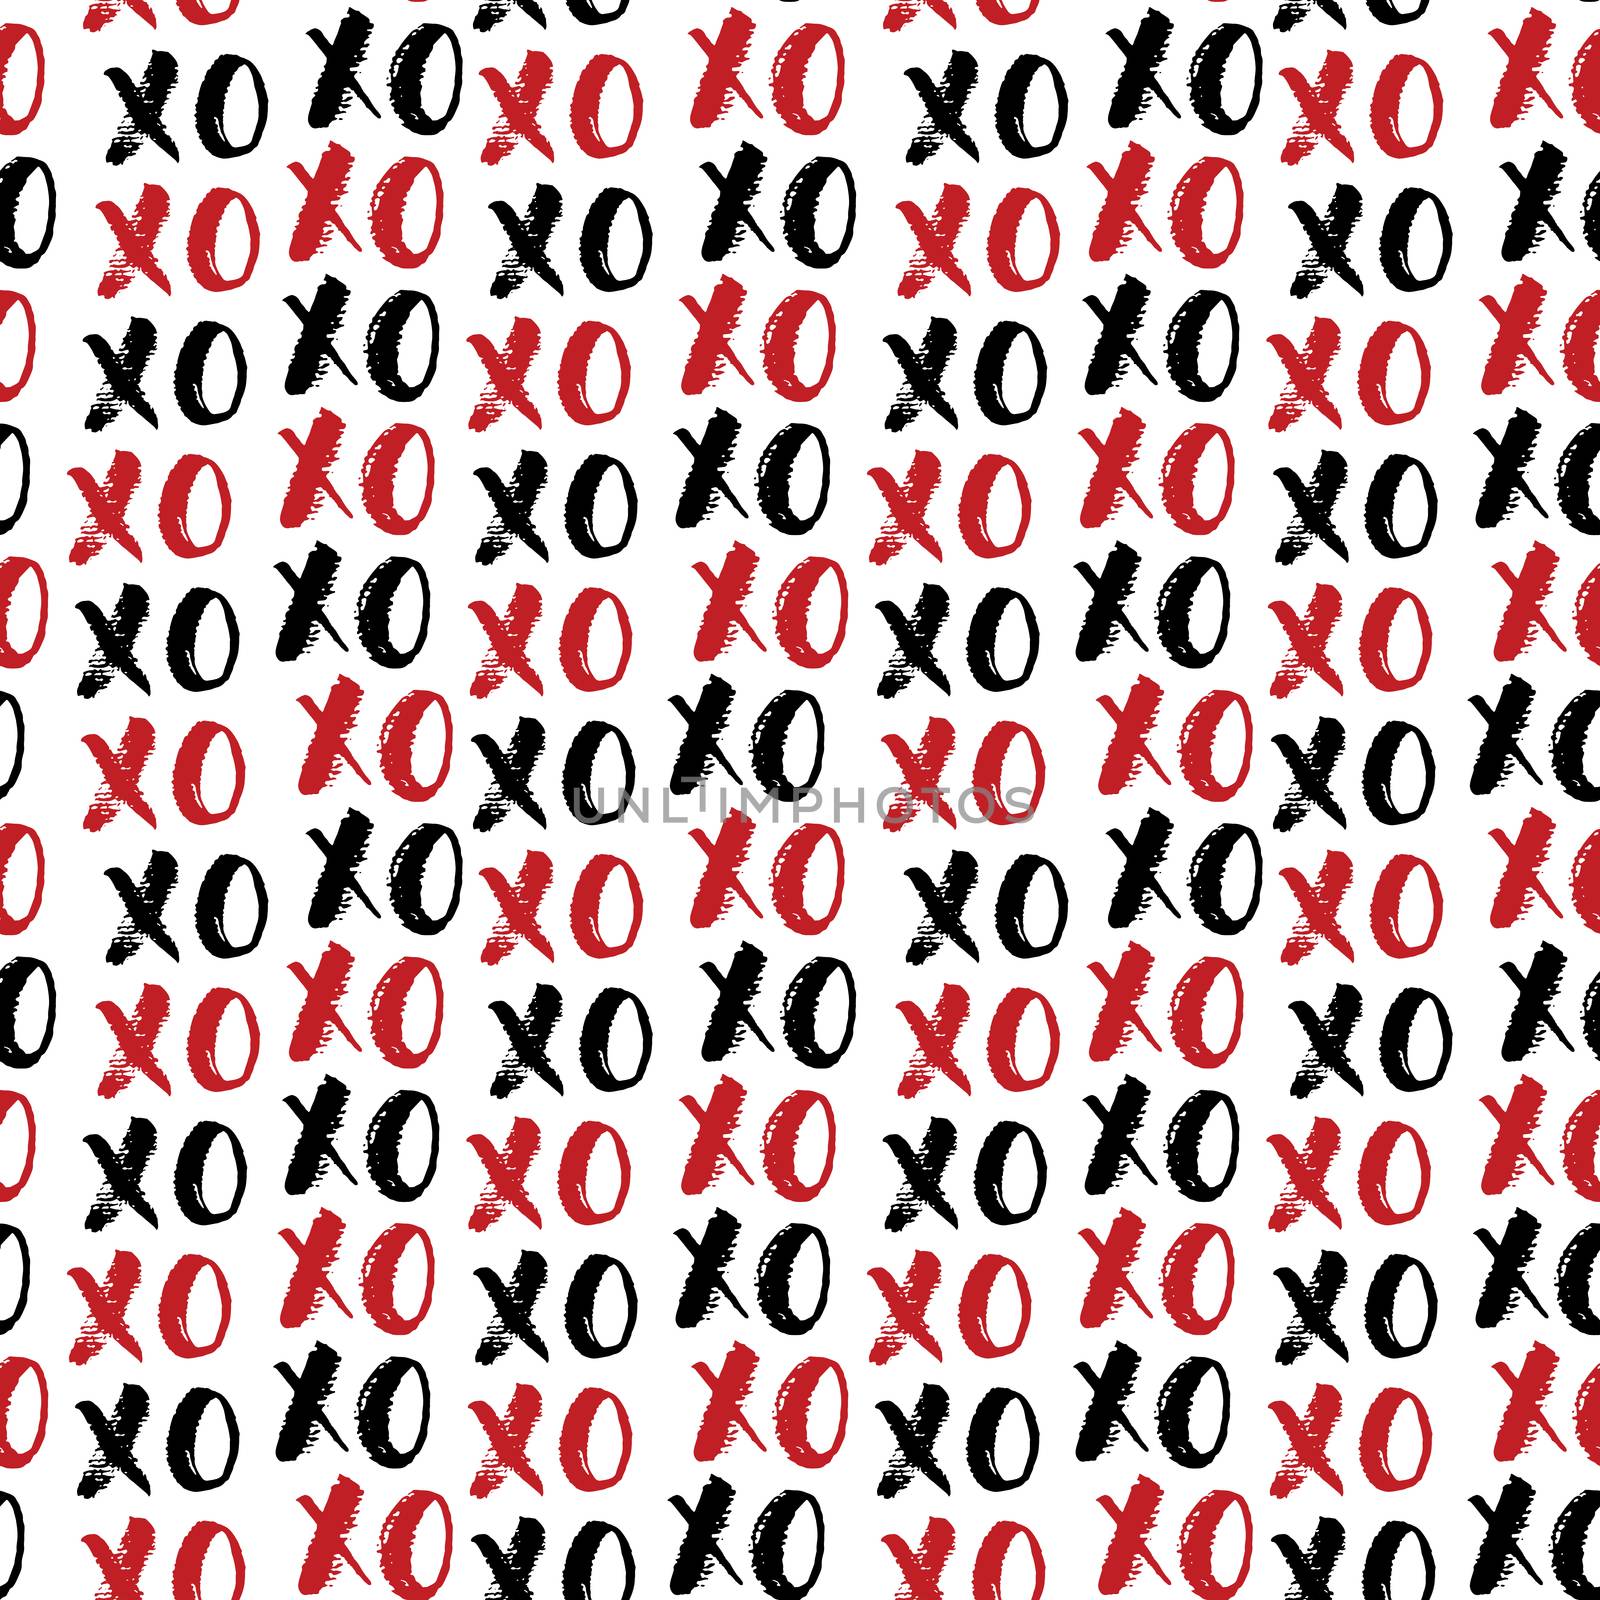 XOXO brush lettering signs seamless pattern, Grunge calligraphiv c hugs and kisses Phrase, Internet slang abbreviation XOXO symbols, vector illustration isolated on white background by Lemon_workshop